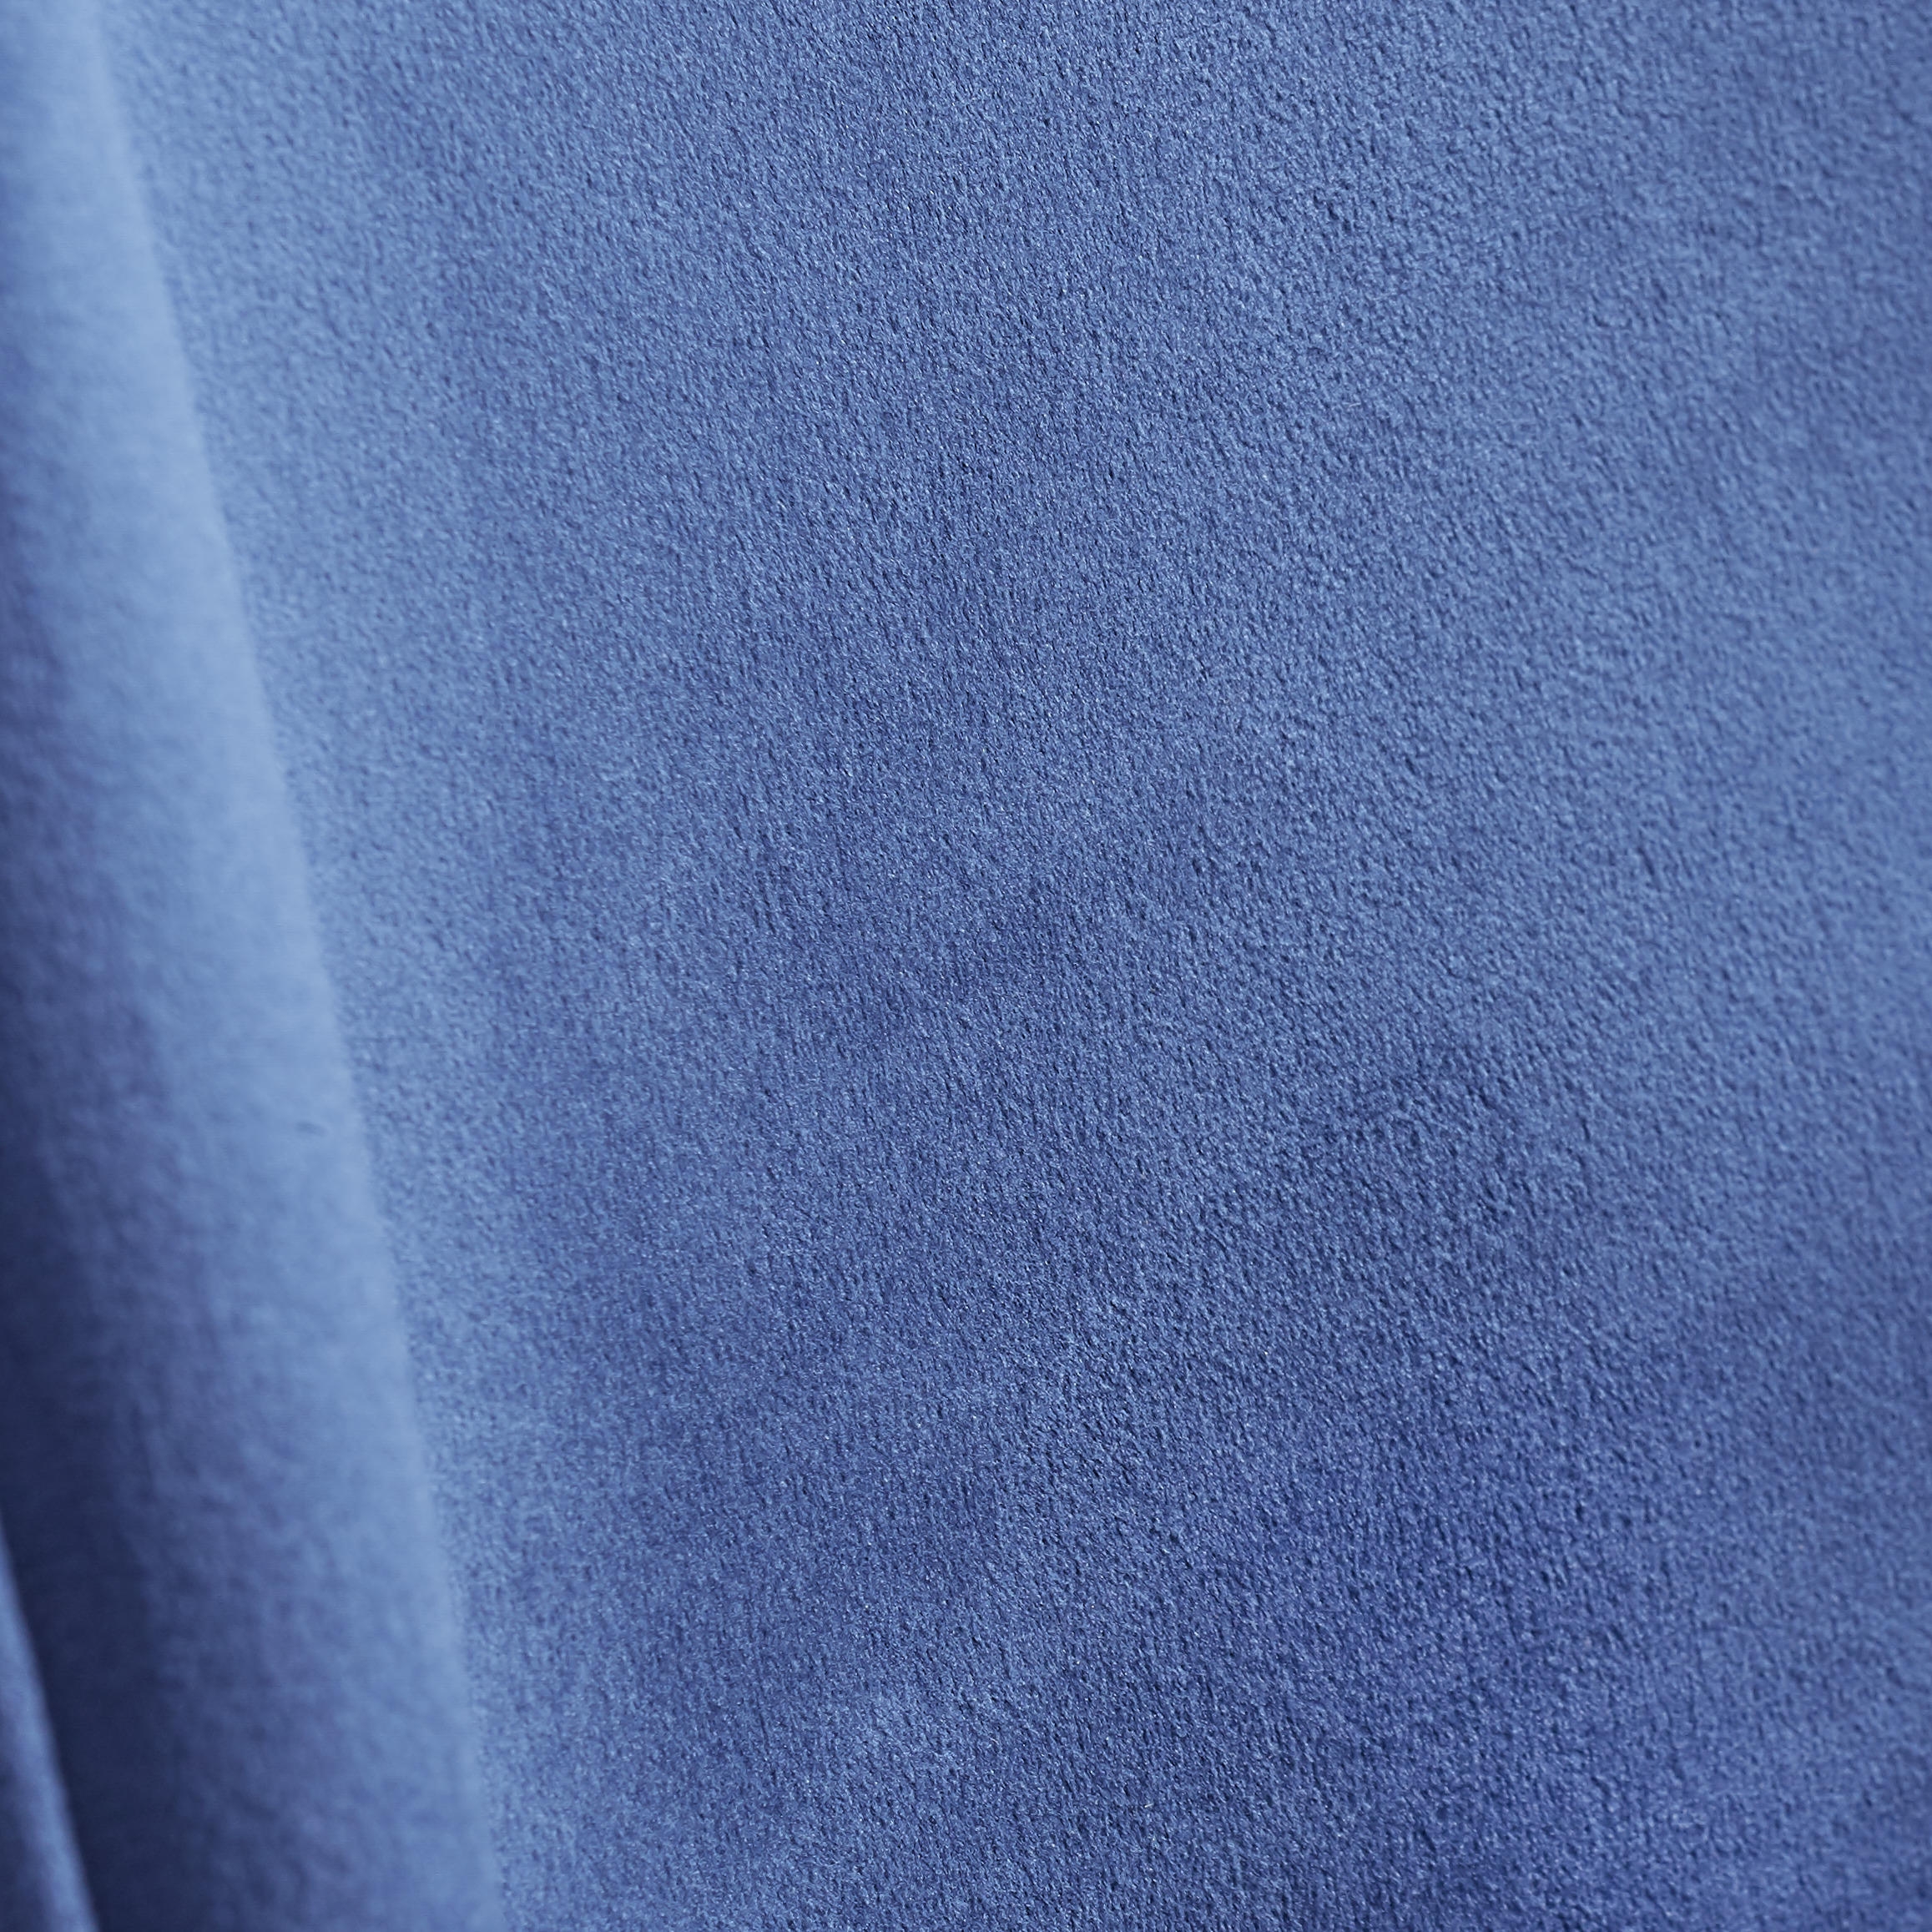 STOL i textil blå, guldfärgad  - blå/guldfärgad, Trend, metall/textil (46/86/60cm) - Livetastic